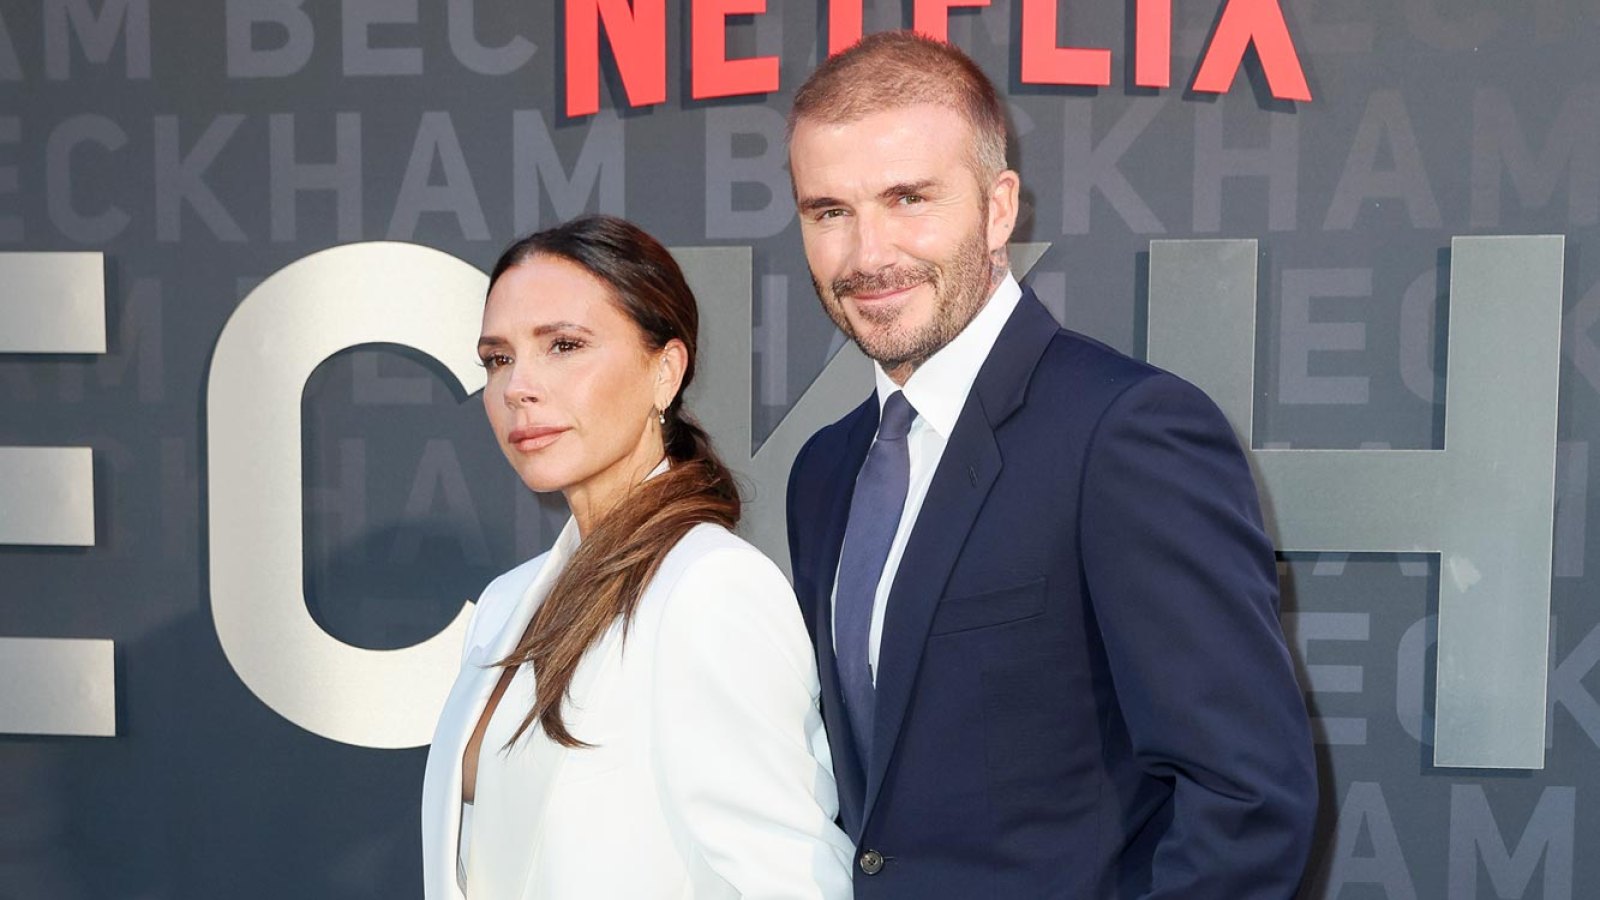 Victoria Beckham Shares How She Felt After Releasing Beckham Documentary